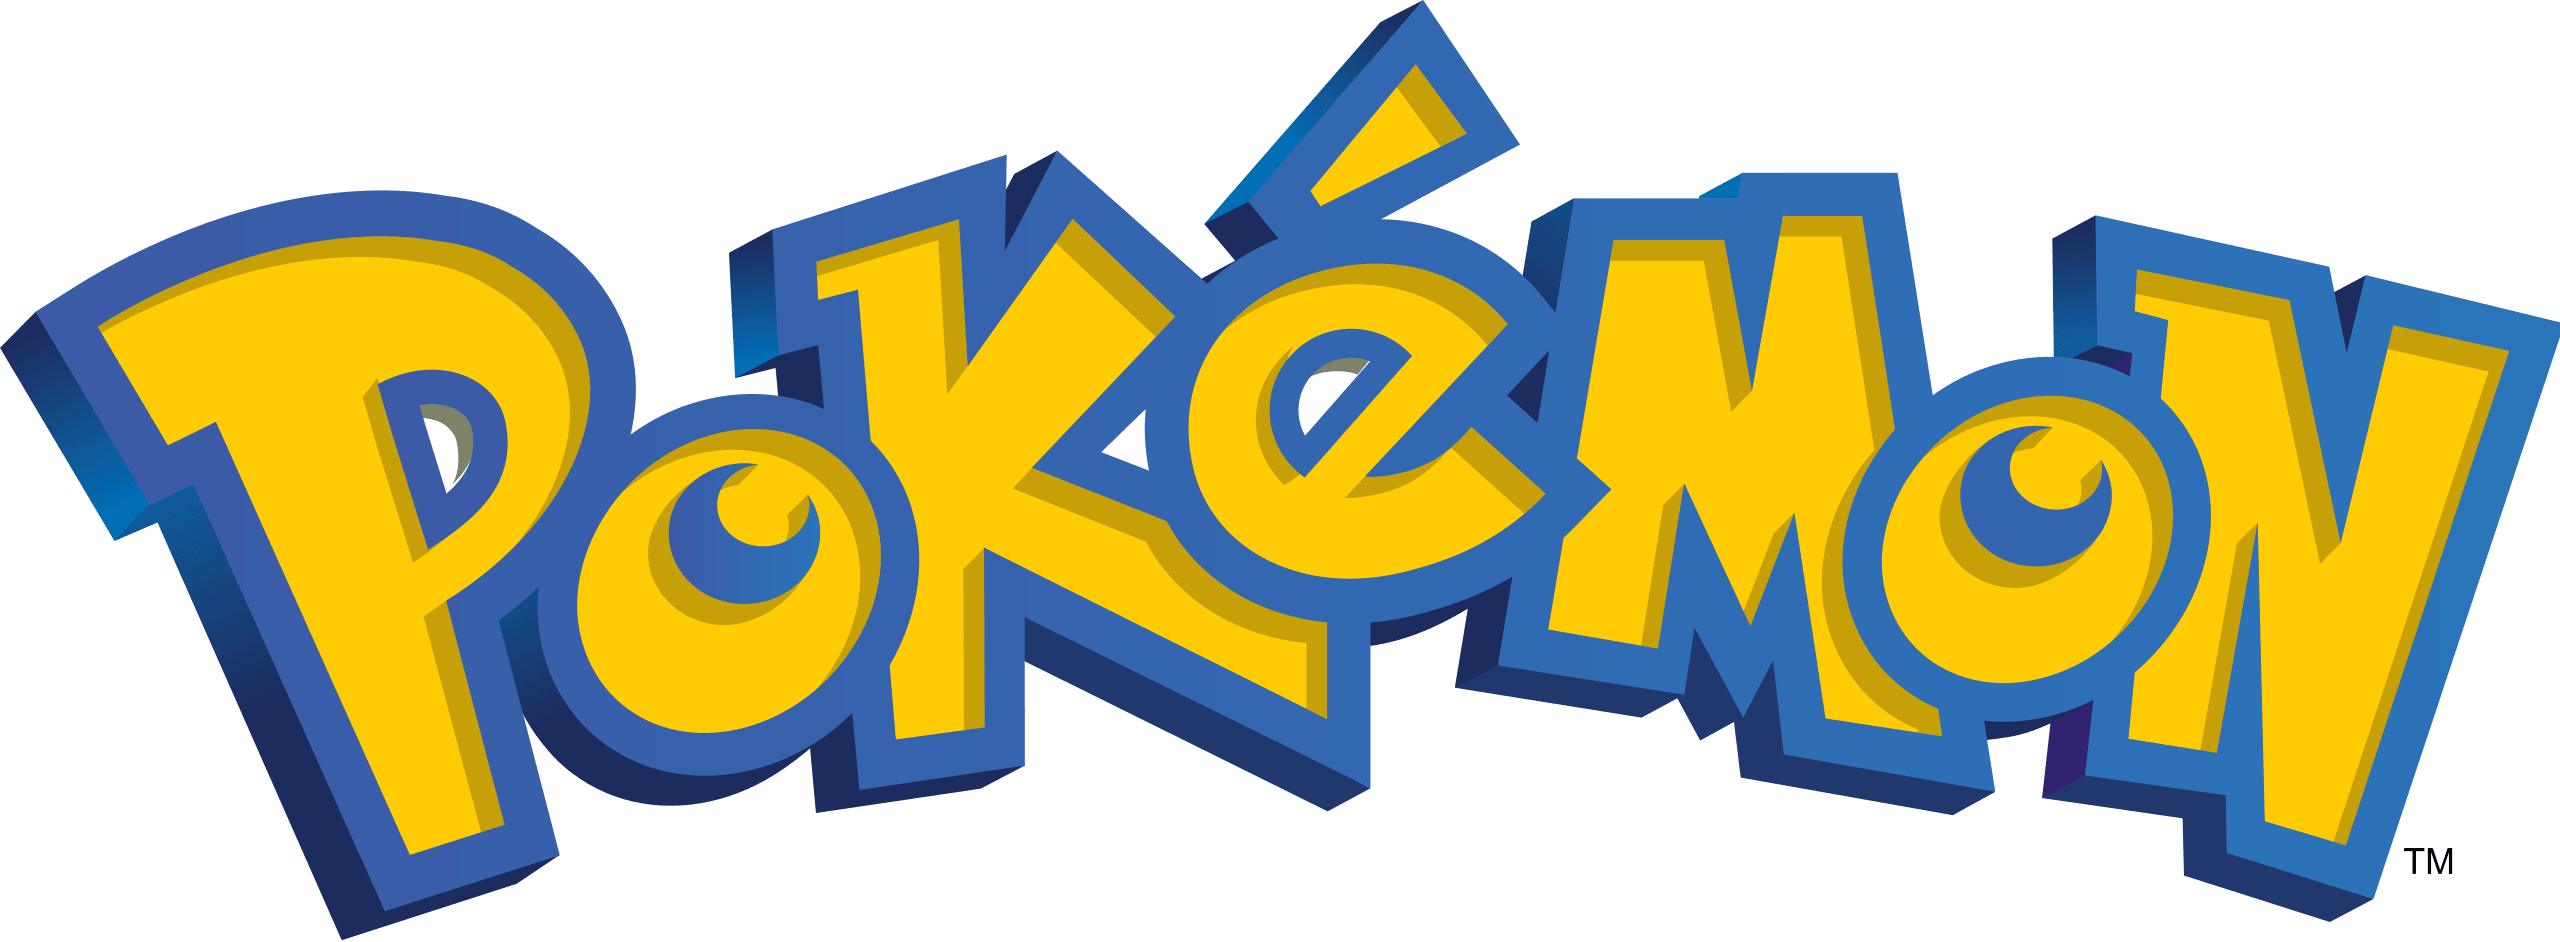 Pokemon Box - Premium Collection - Paldean Fates - Skeledirge ex - Hobby Champion Inc